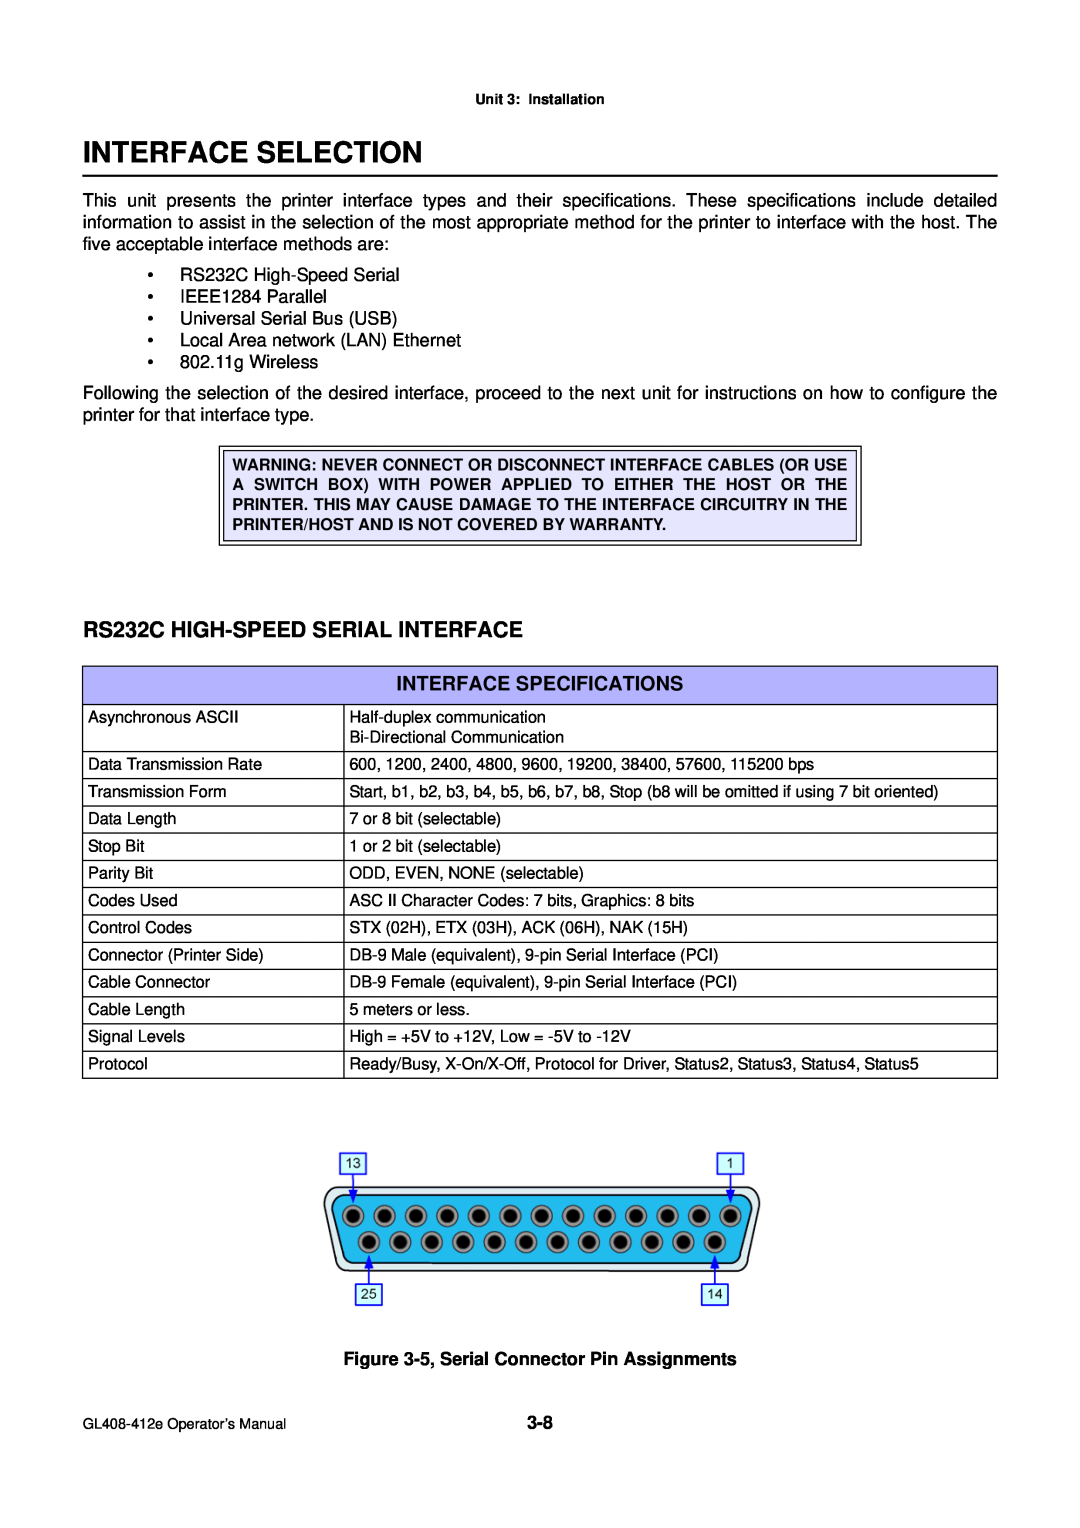 SATO GL4XXE manual Interface Selection, RS232C HIGH-SPEED SERIAL INTERFACE, Interface Specifications 